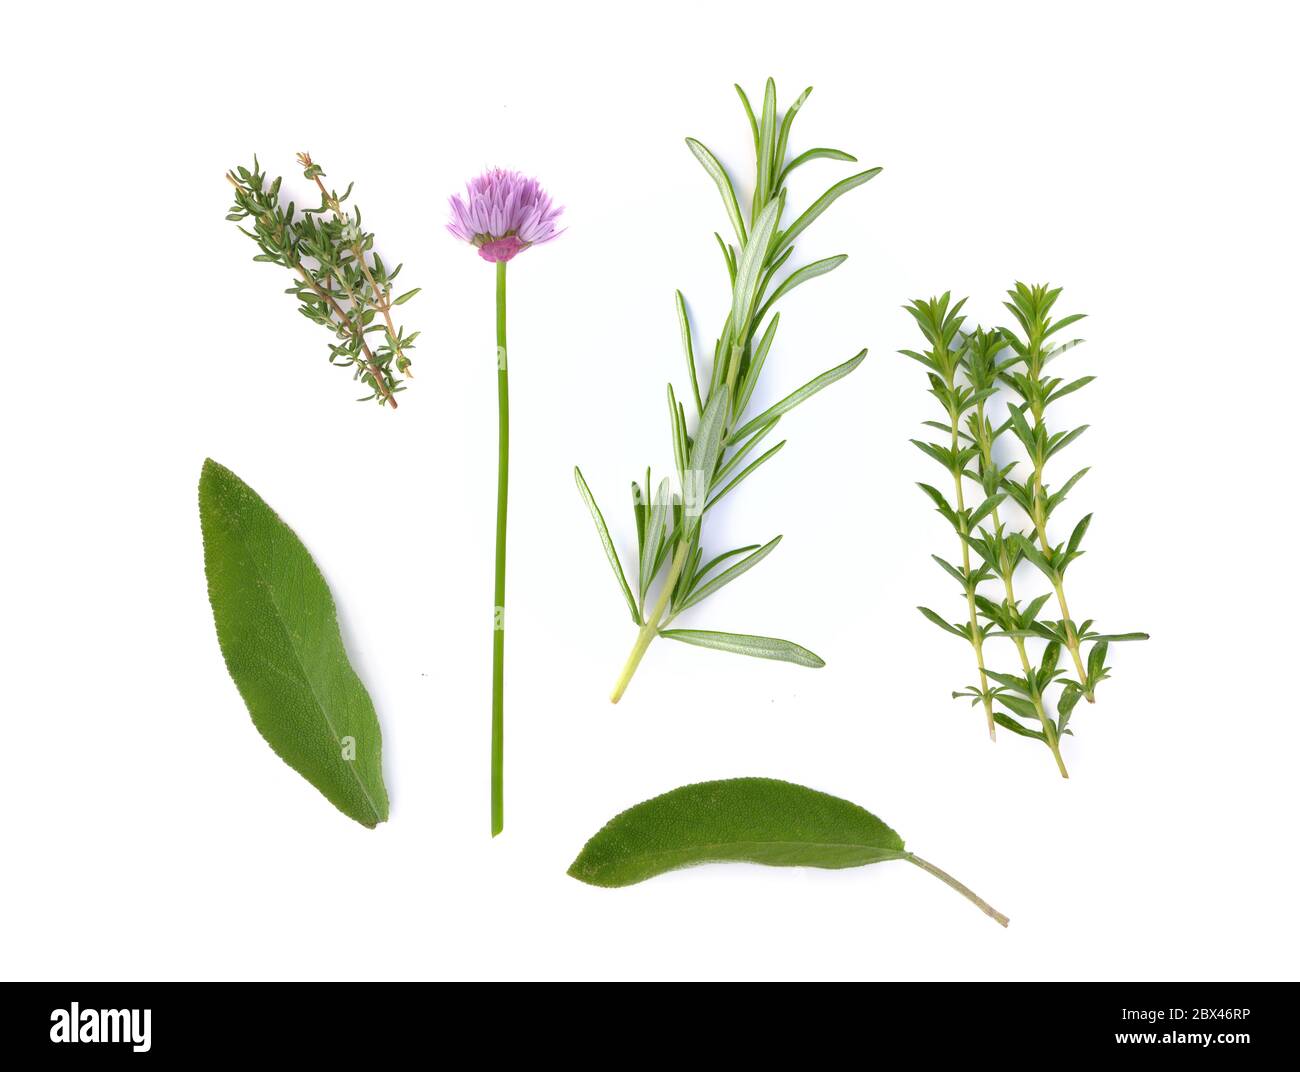 various fresh aromatic herbs on white background Stock Photo